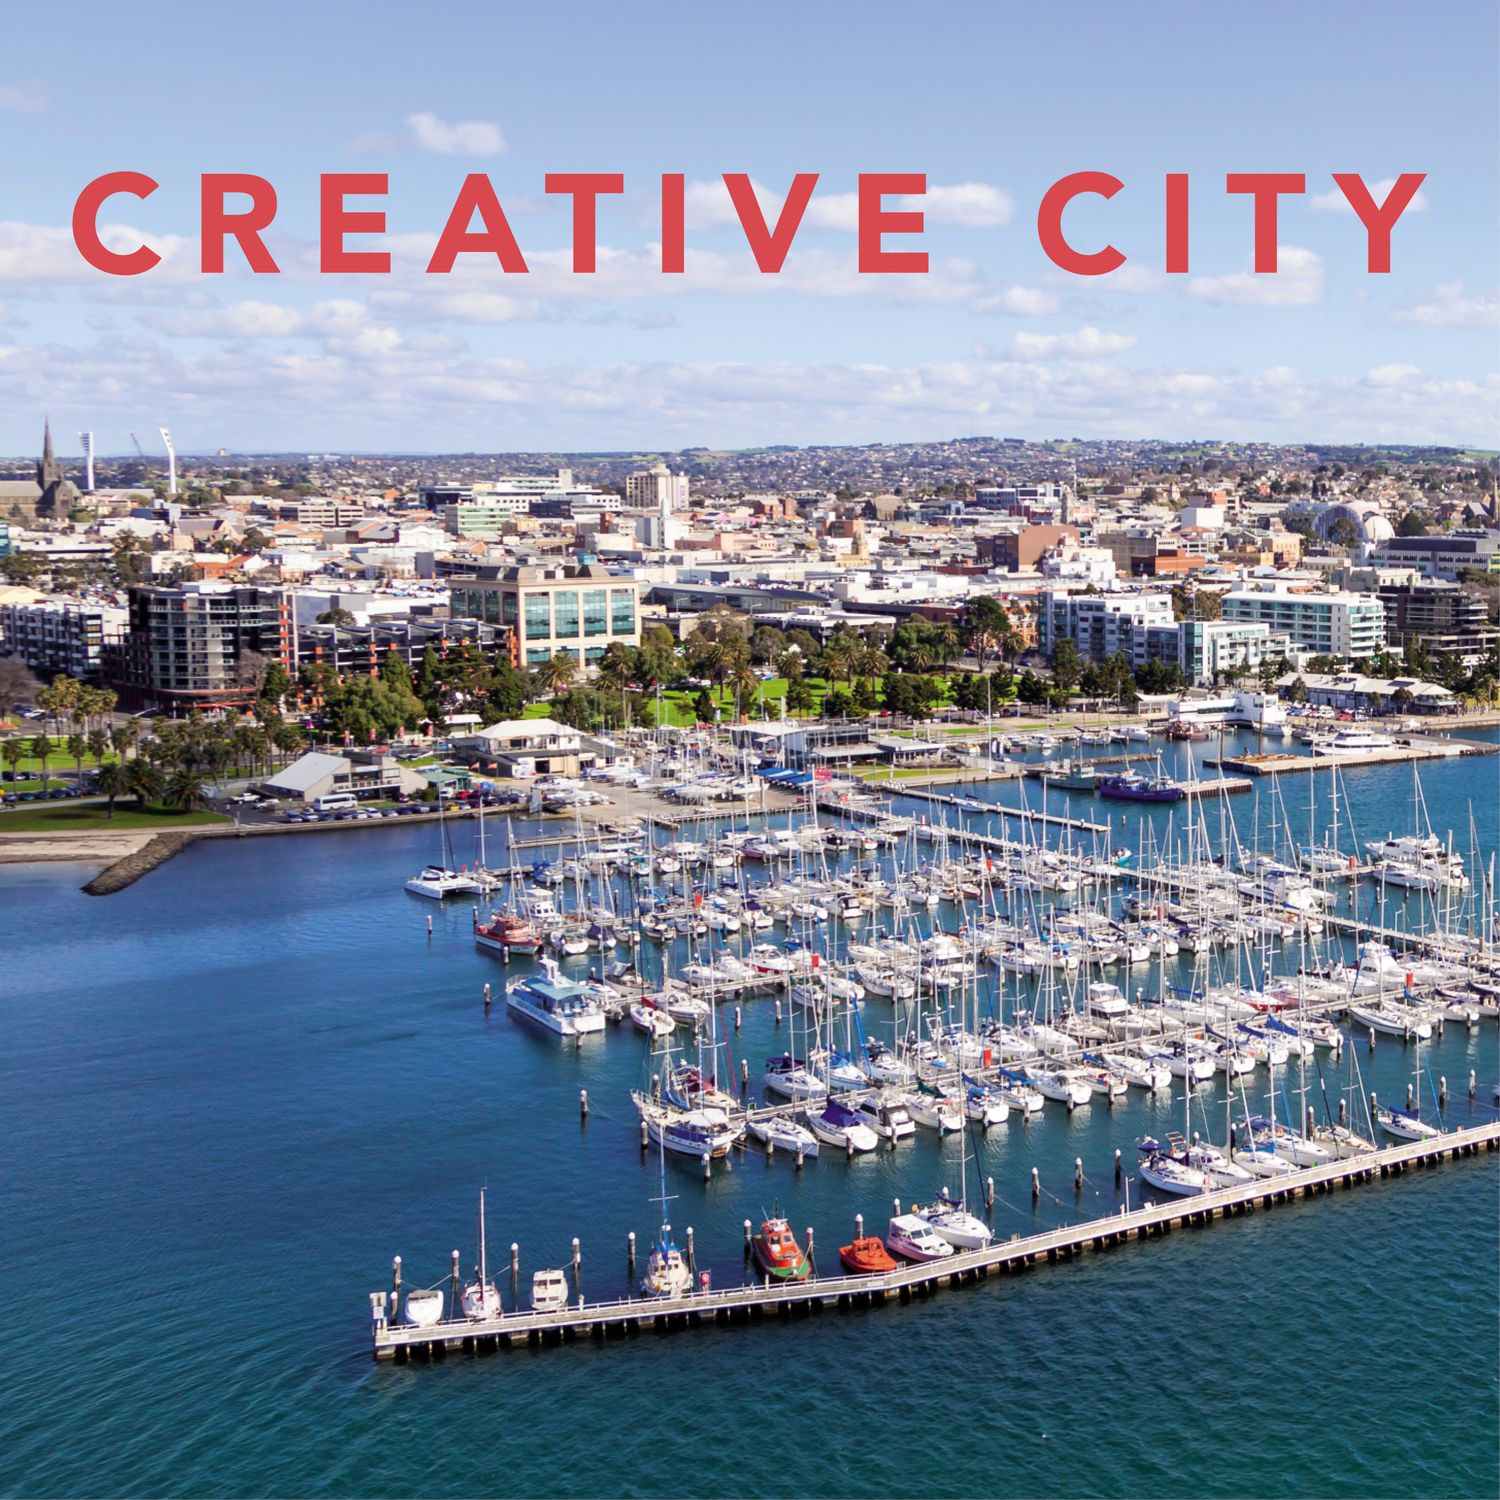 Geelong A Creative City